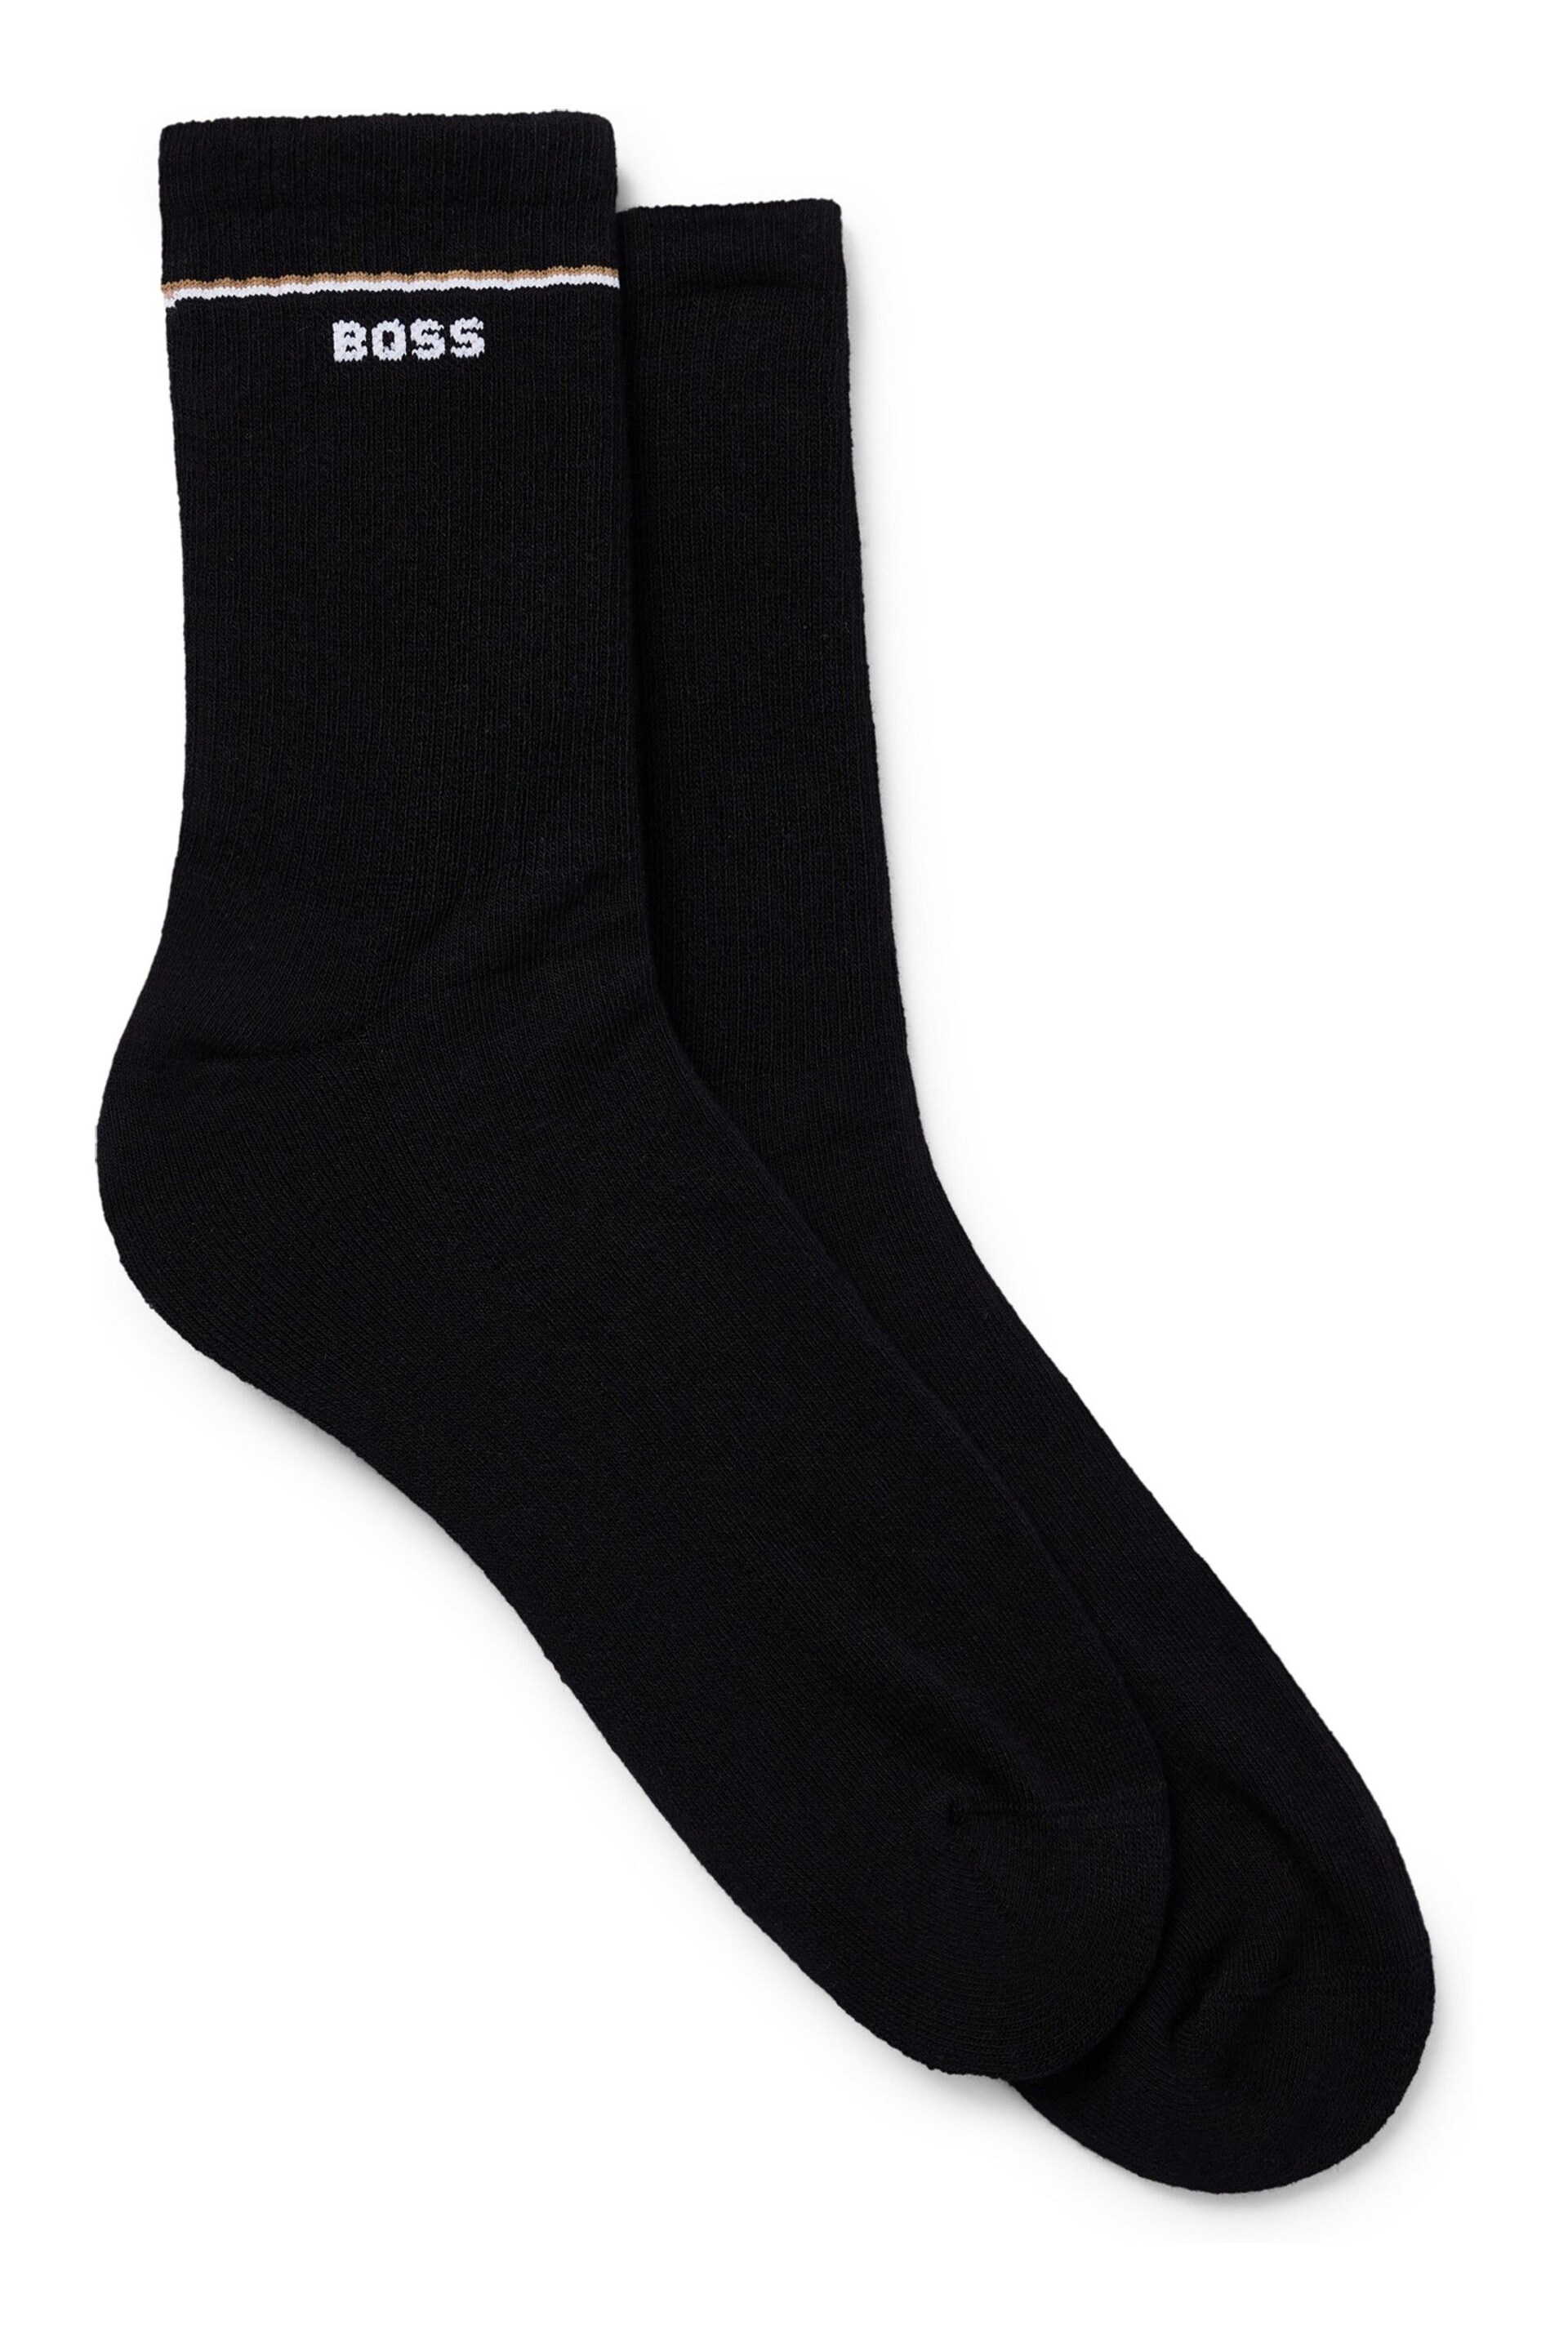 BOSS Black Iconic Logo Stripe Ribbed Socks 2 Pack - Image 1 of 3